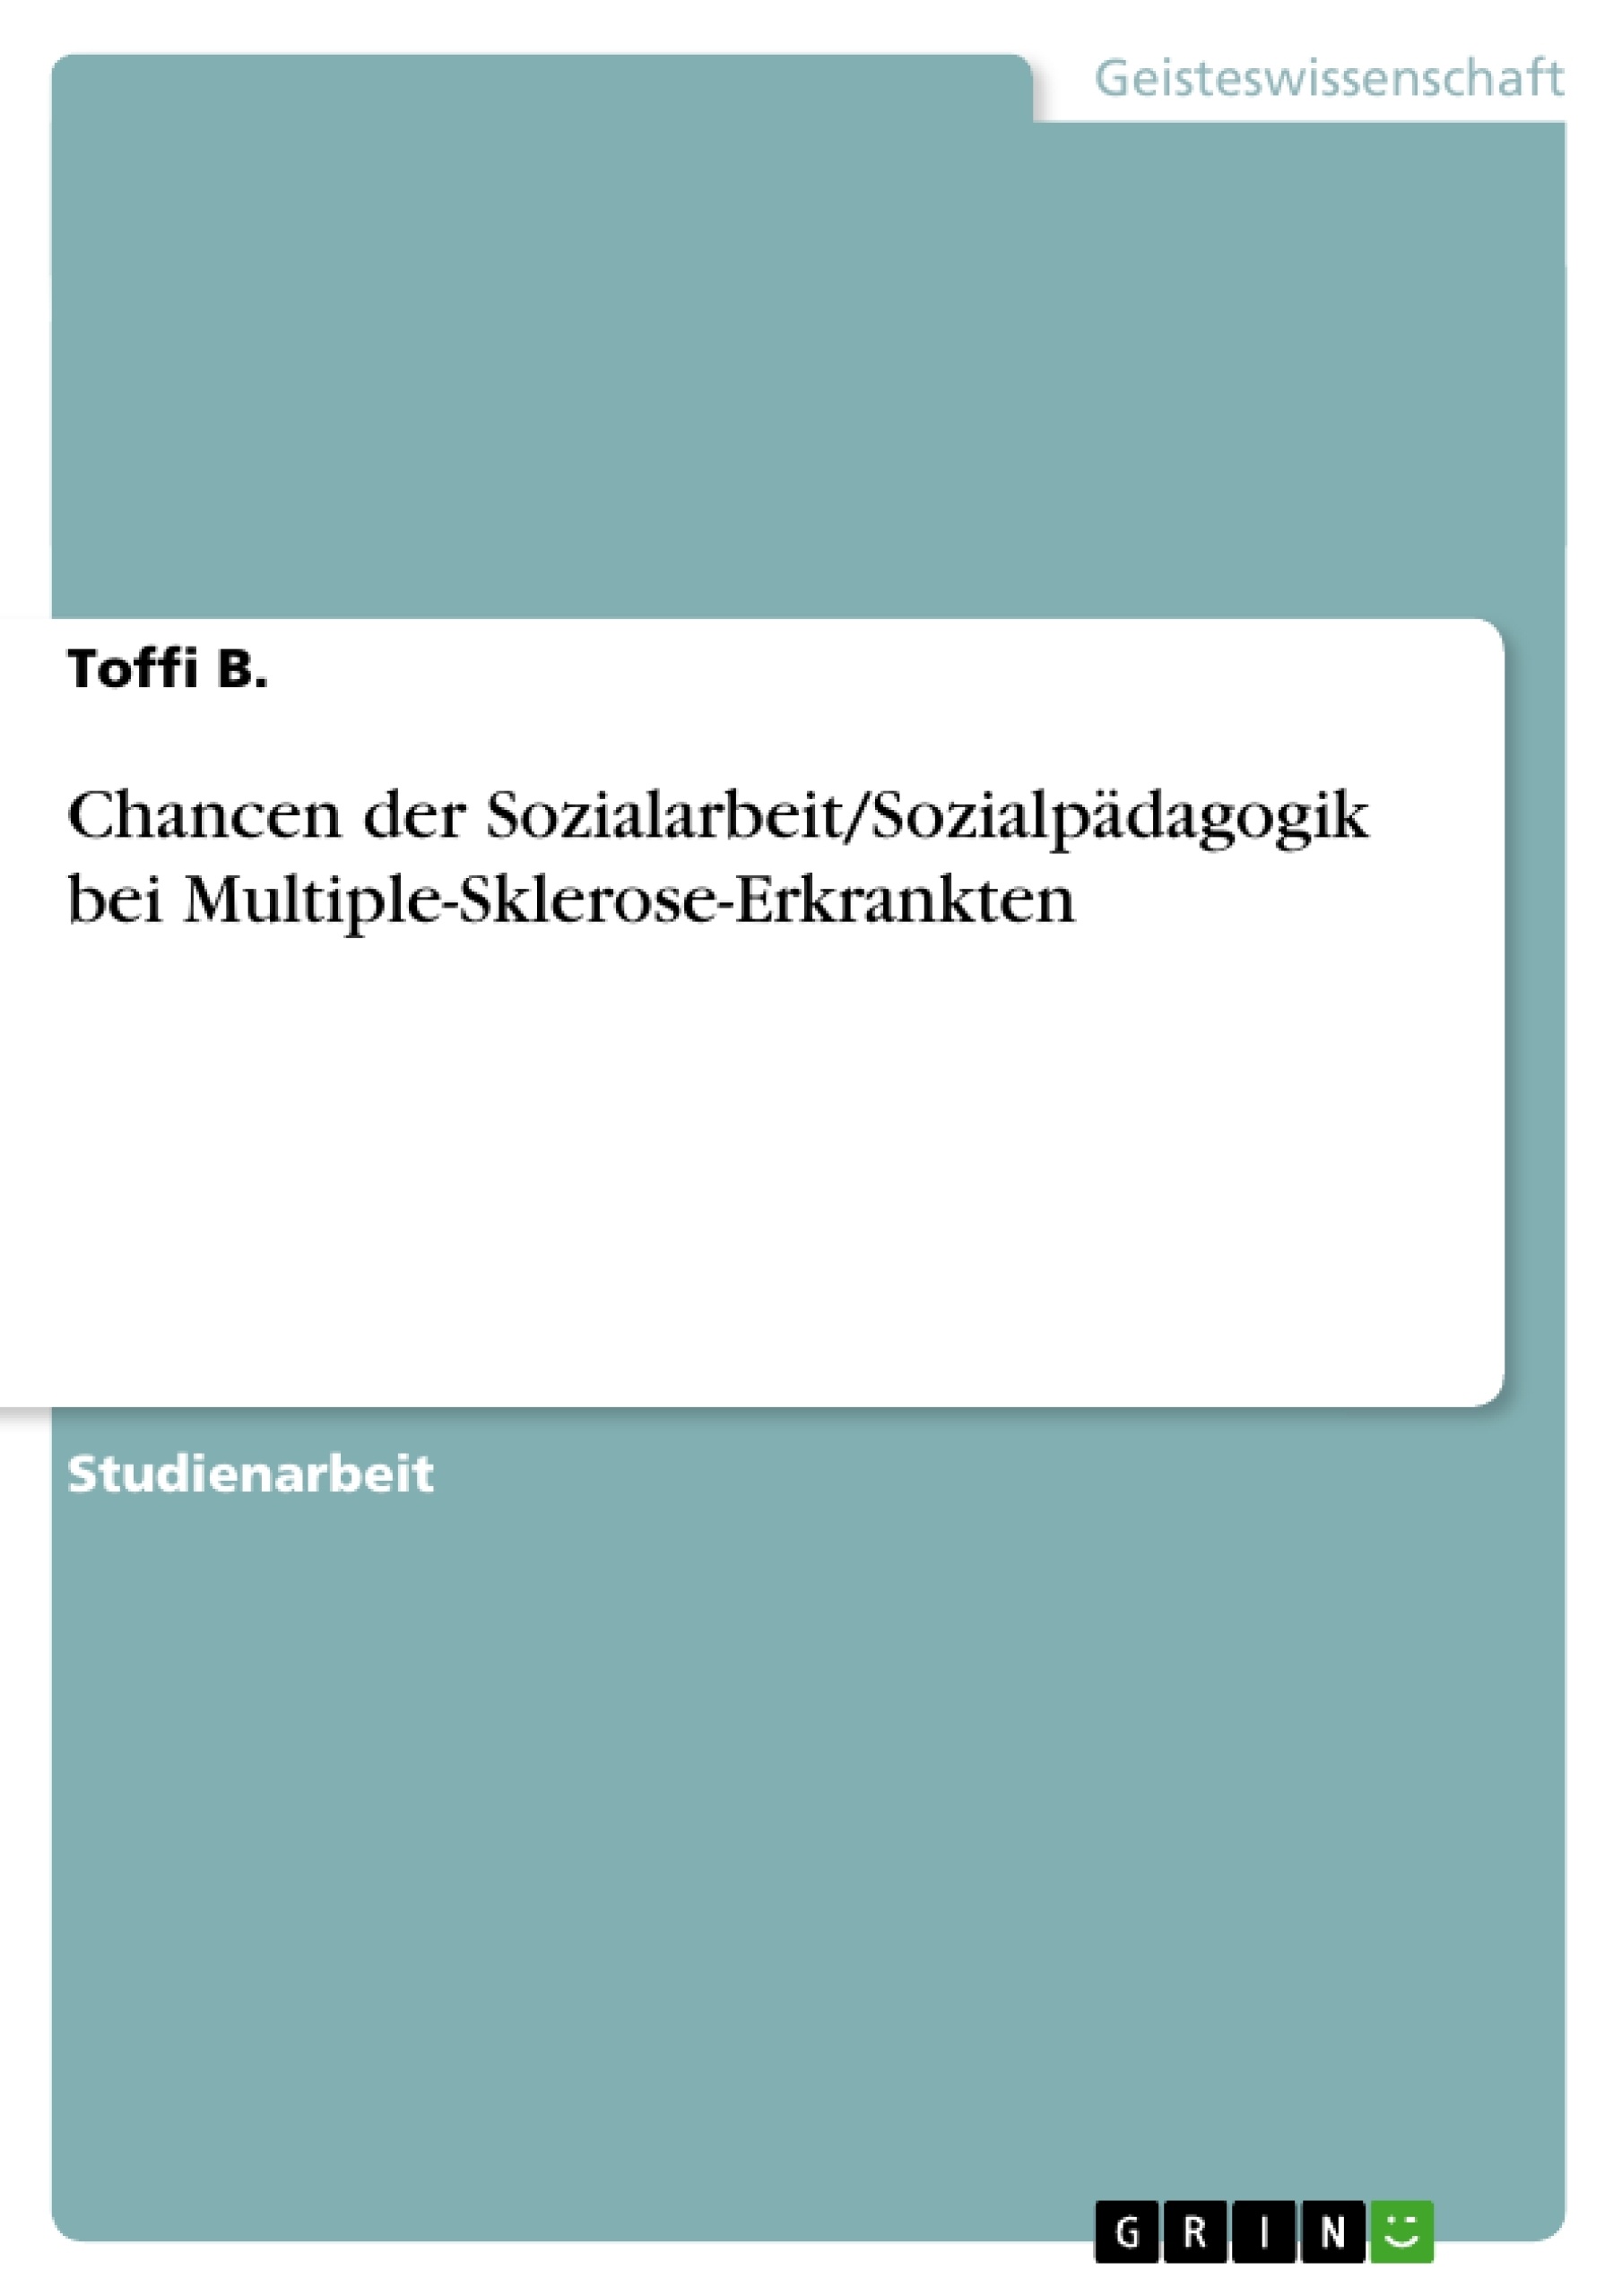 Titre: Chancen der Sozialarbeit/Sozialpädagogik bei Multiple-Sklerose-Erkrankten